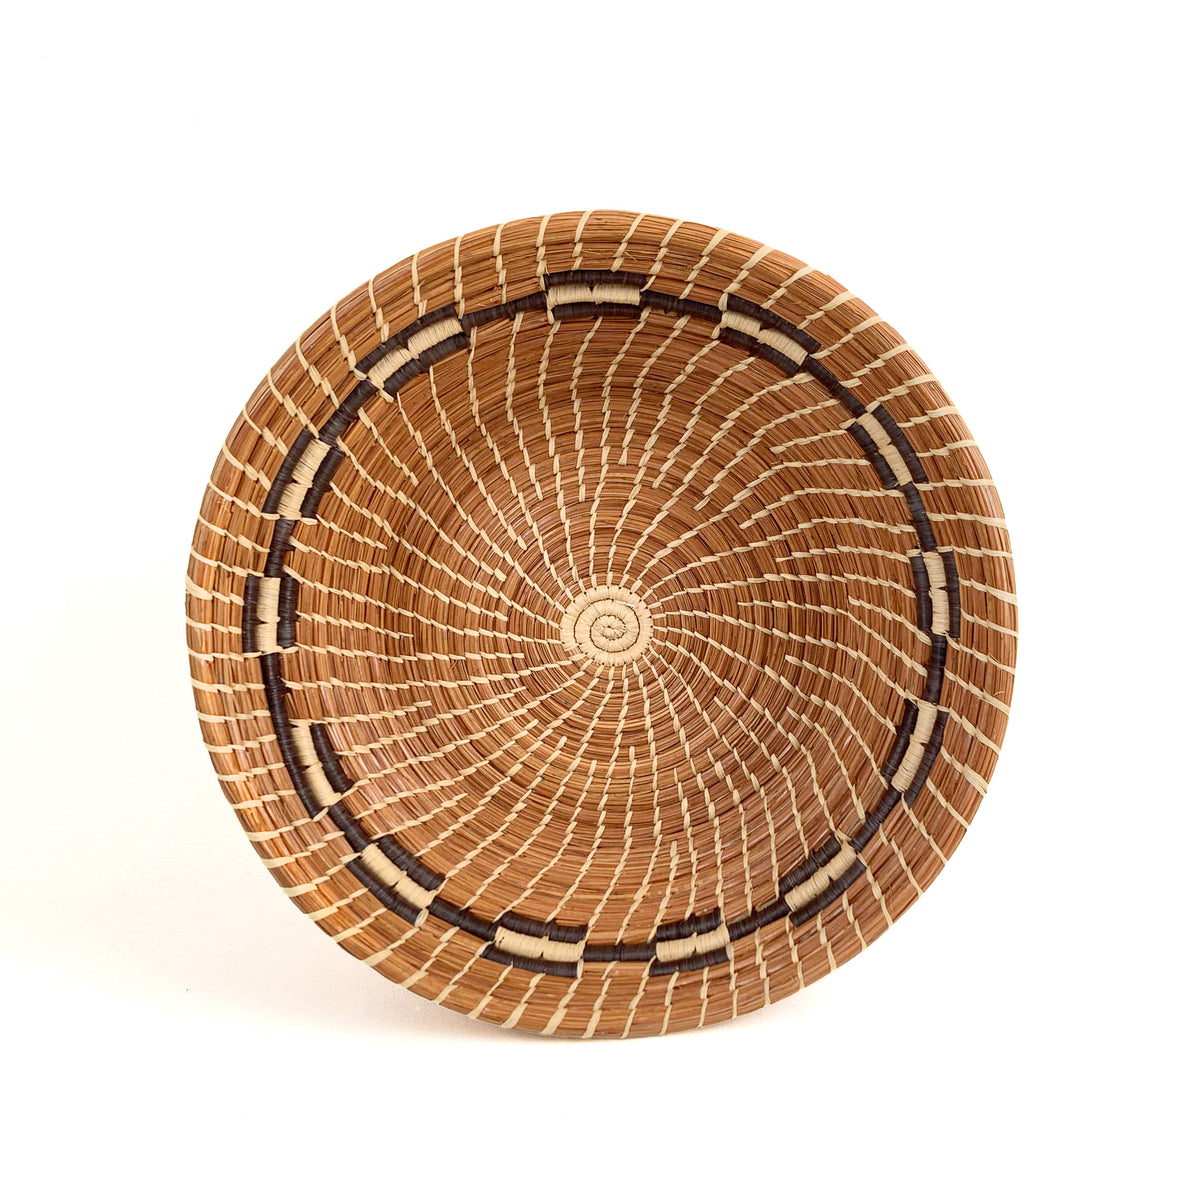 Pine needle basket with two-tone band